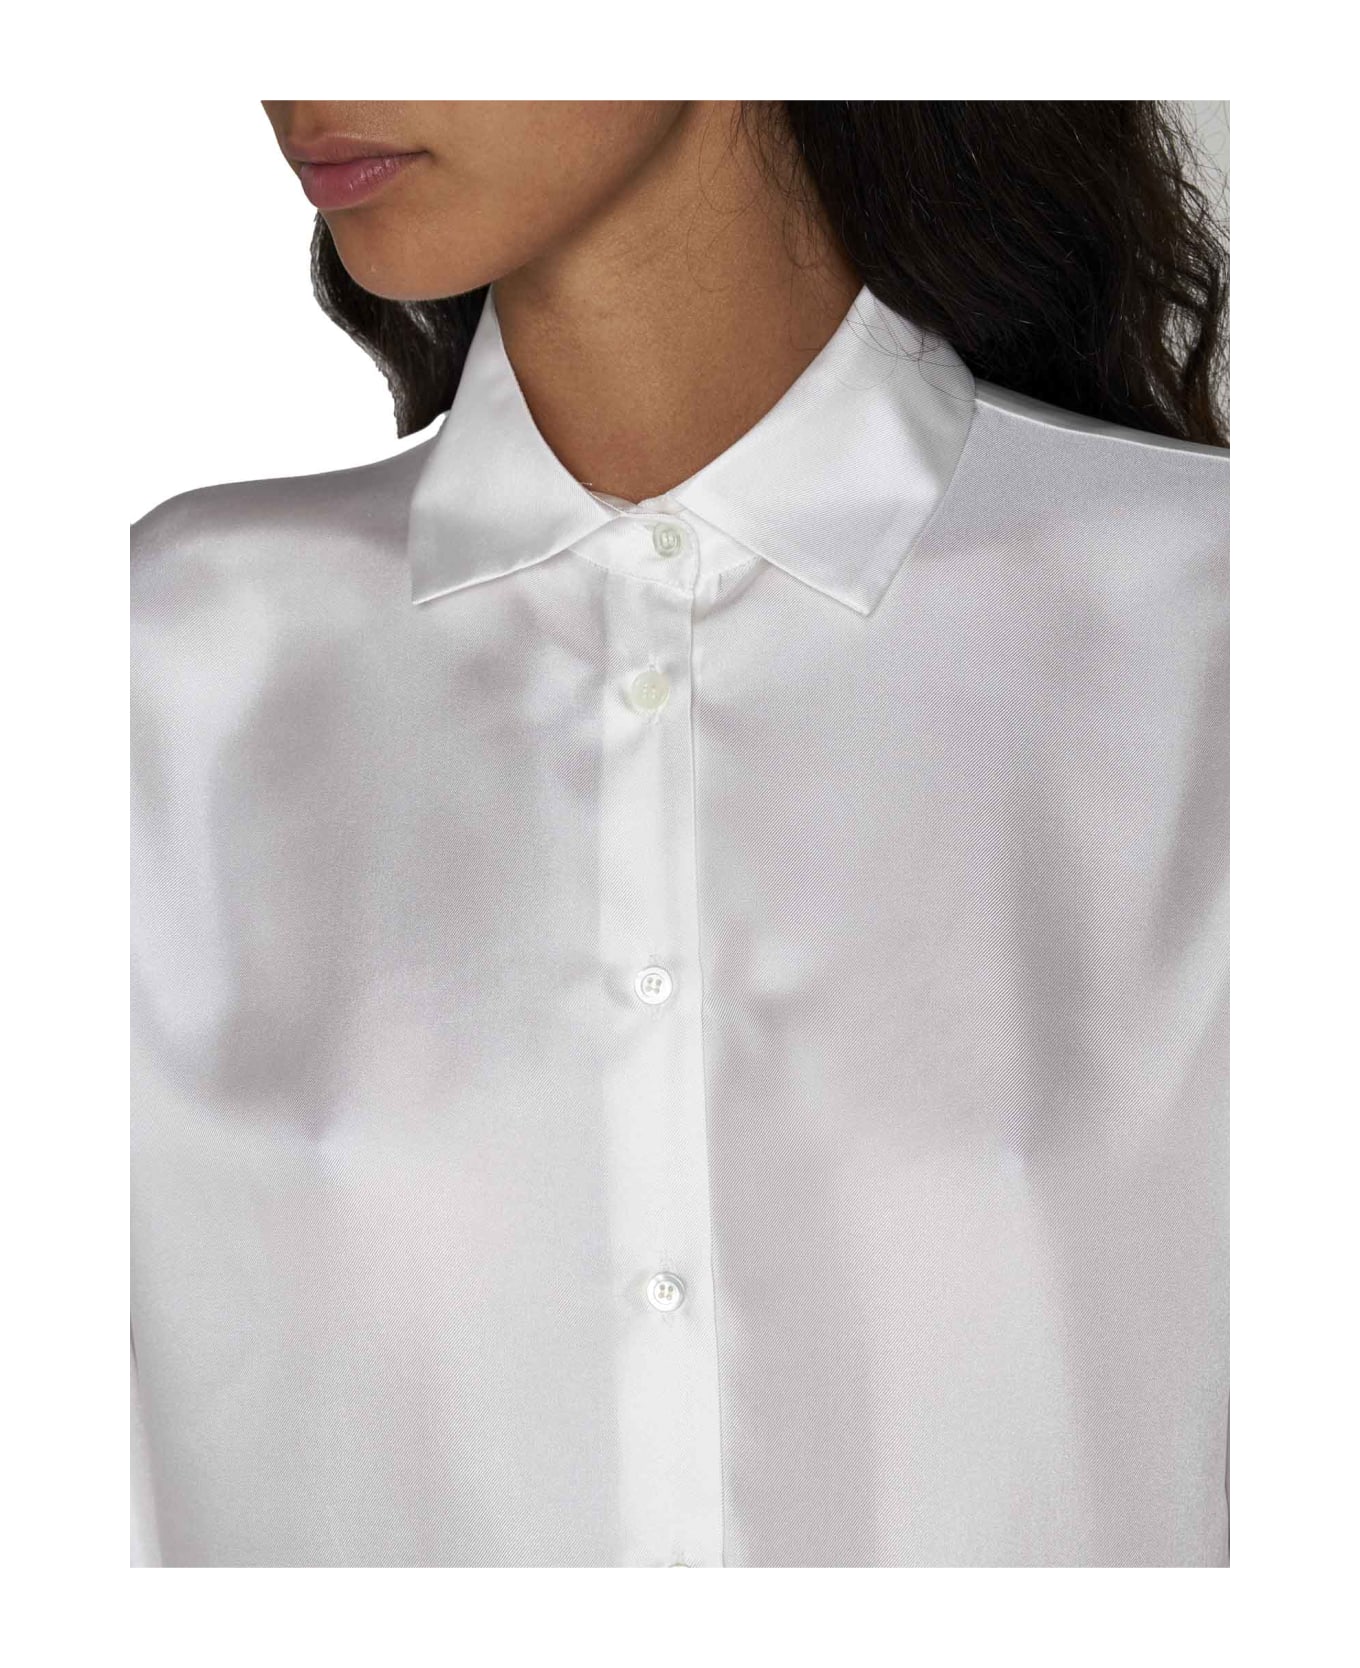 Blanca Vita Shirt - Diamante シャツ